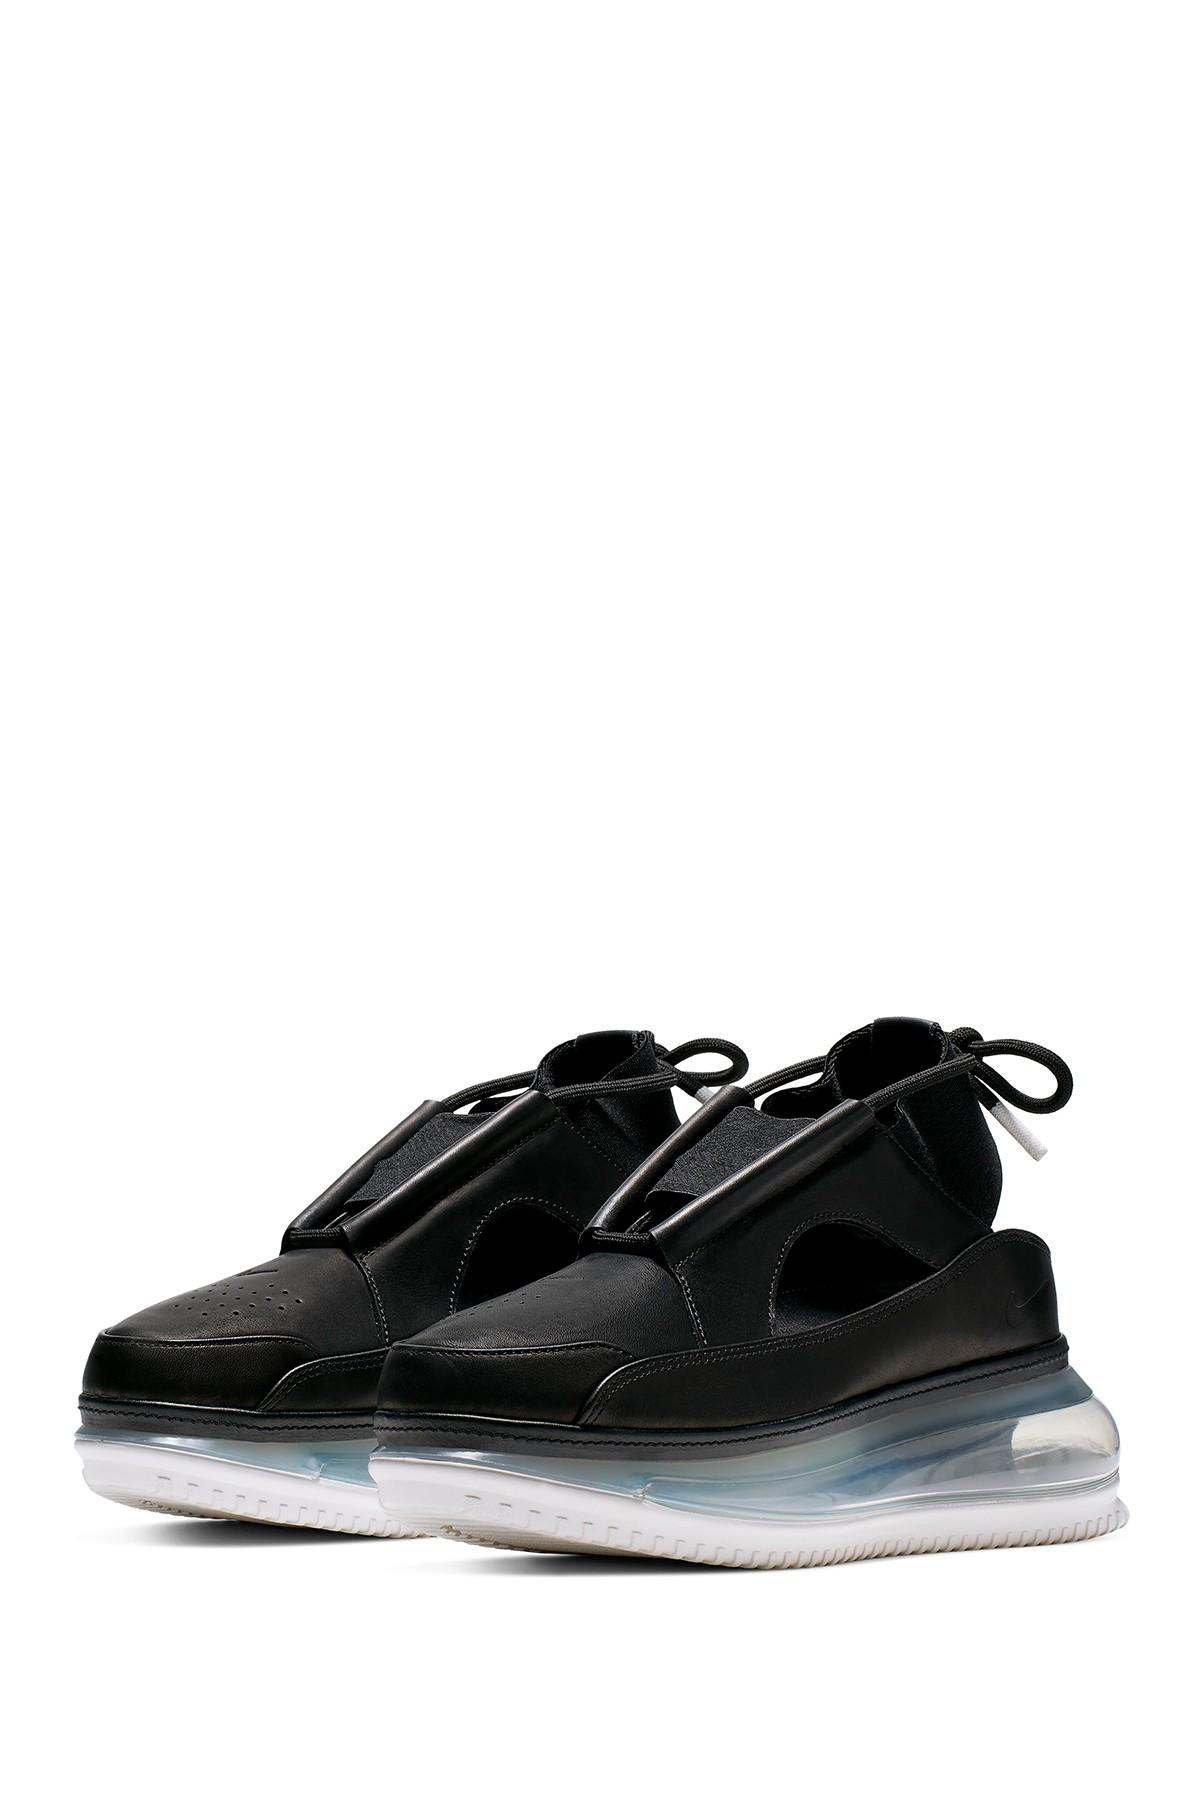 Nike Air Max Ff 720 Shoe in Black | Lyst